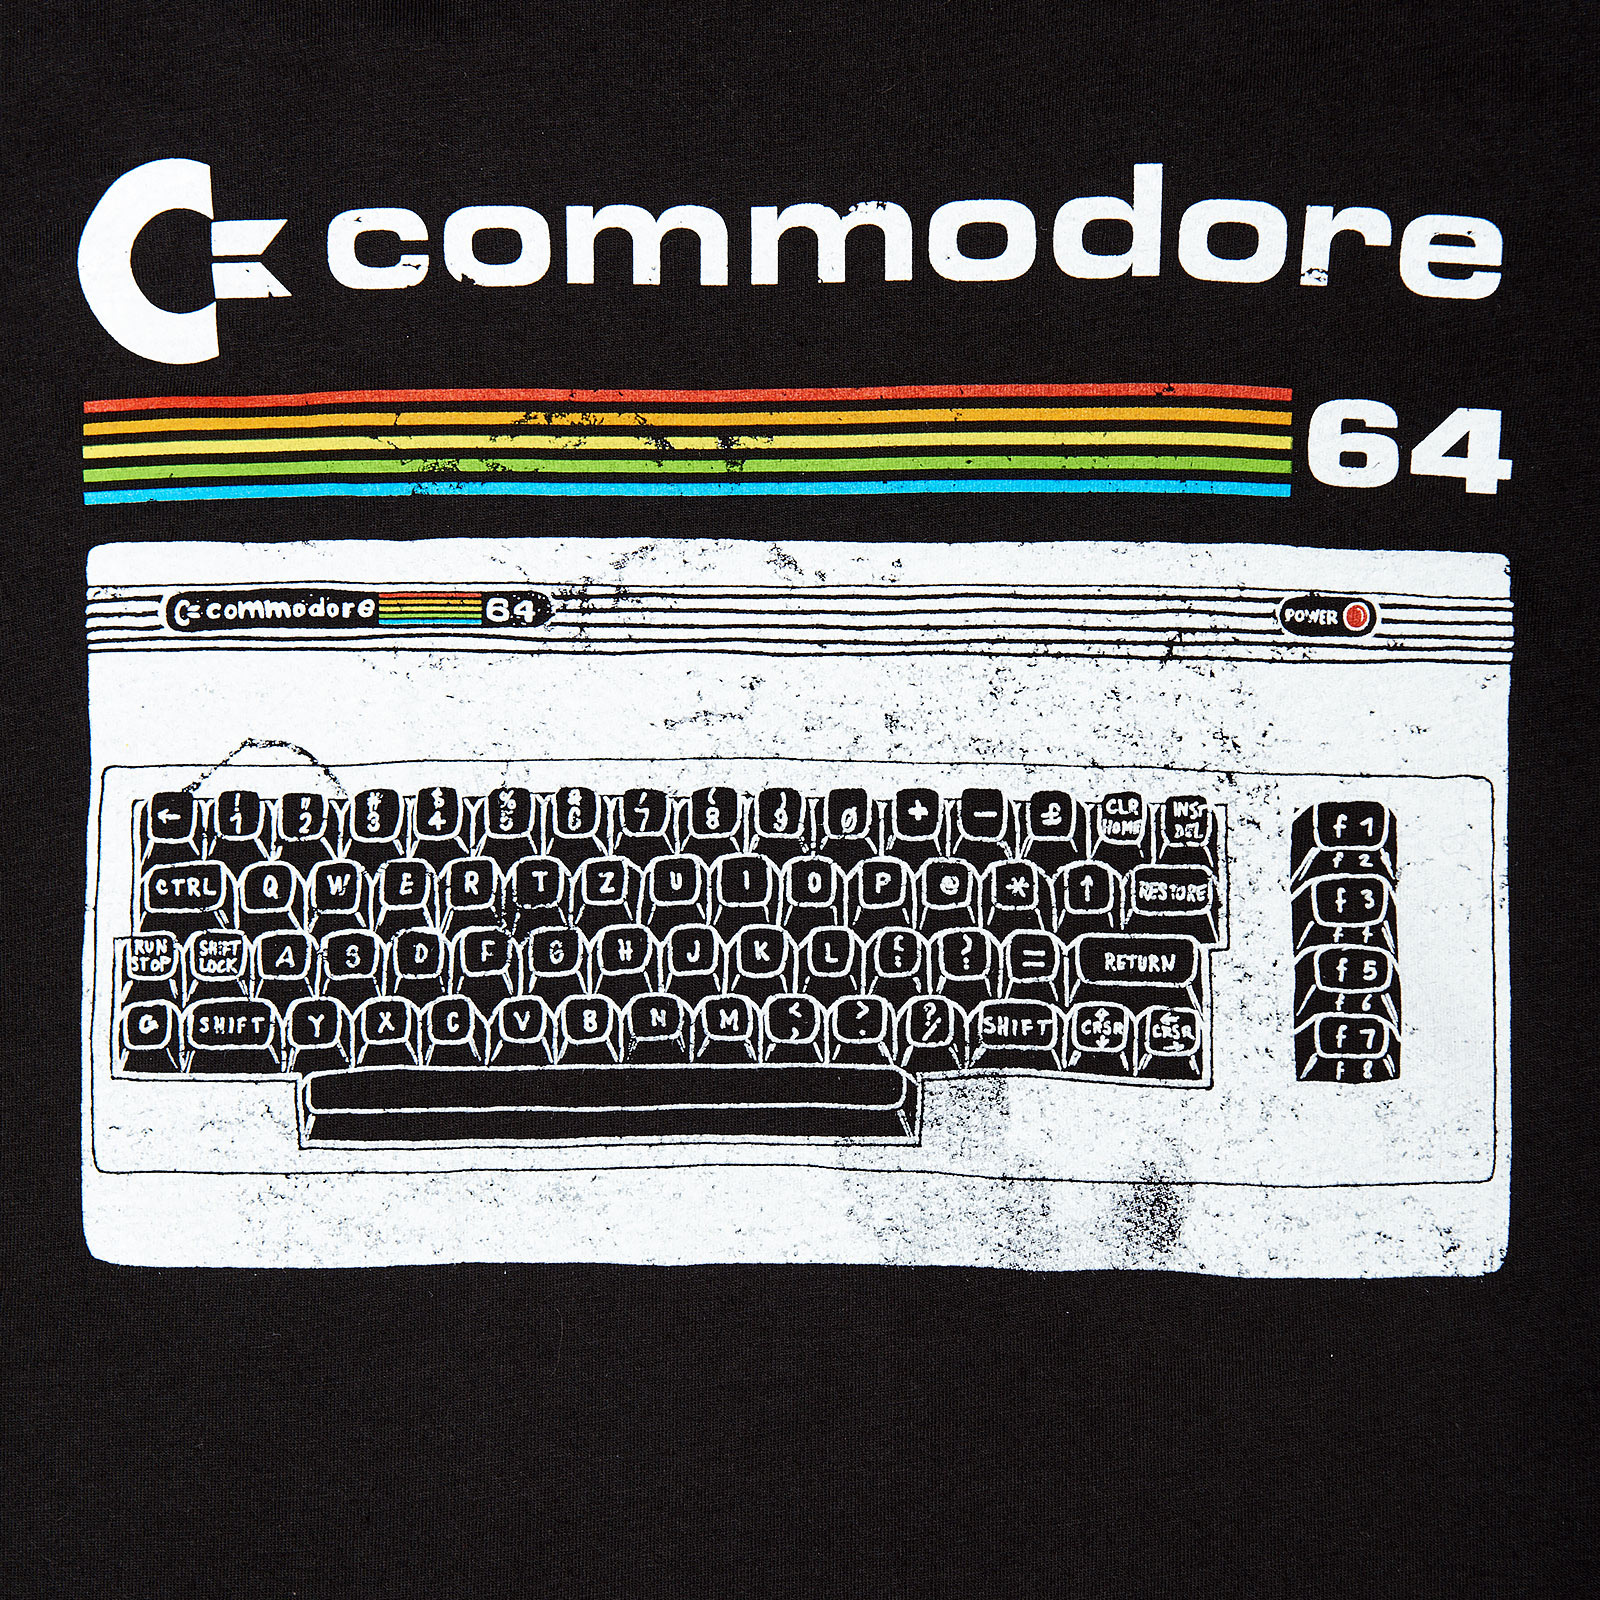 Commodore 64 - T-shirt Classic Keyboard noir